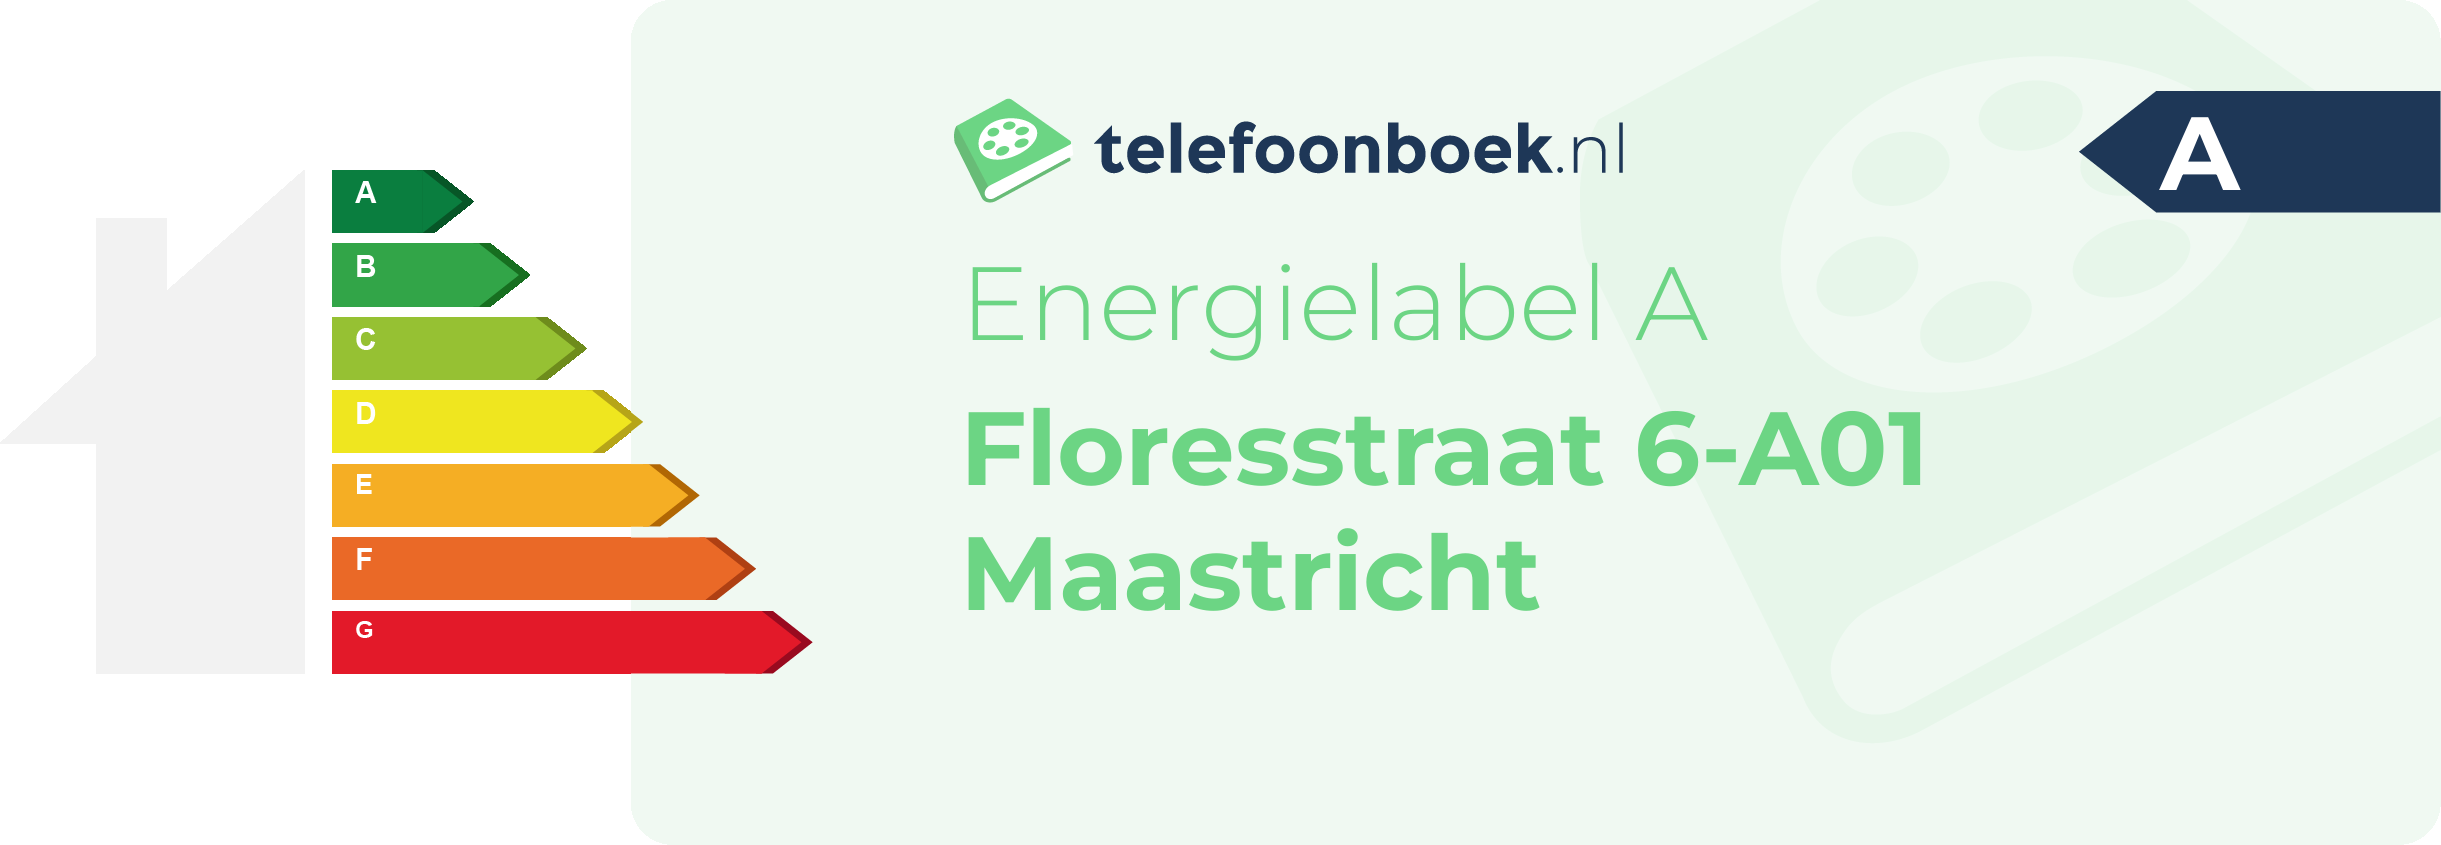 Energielabel Floresstraat 6-A01 Maastricht